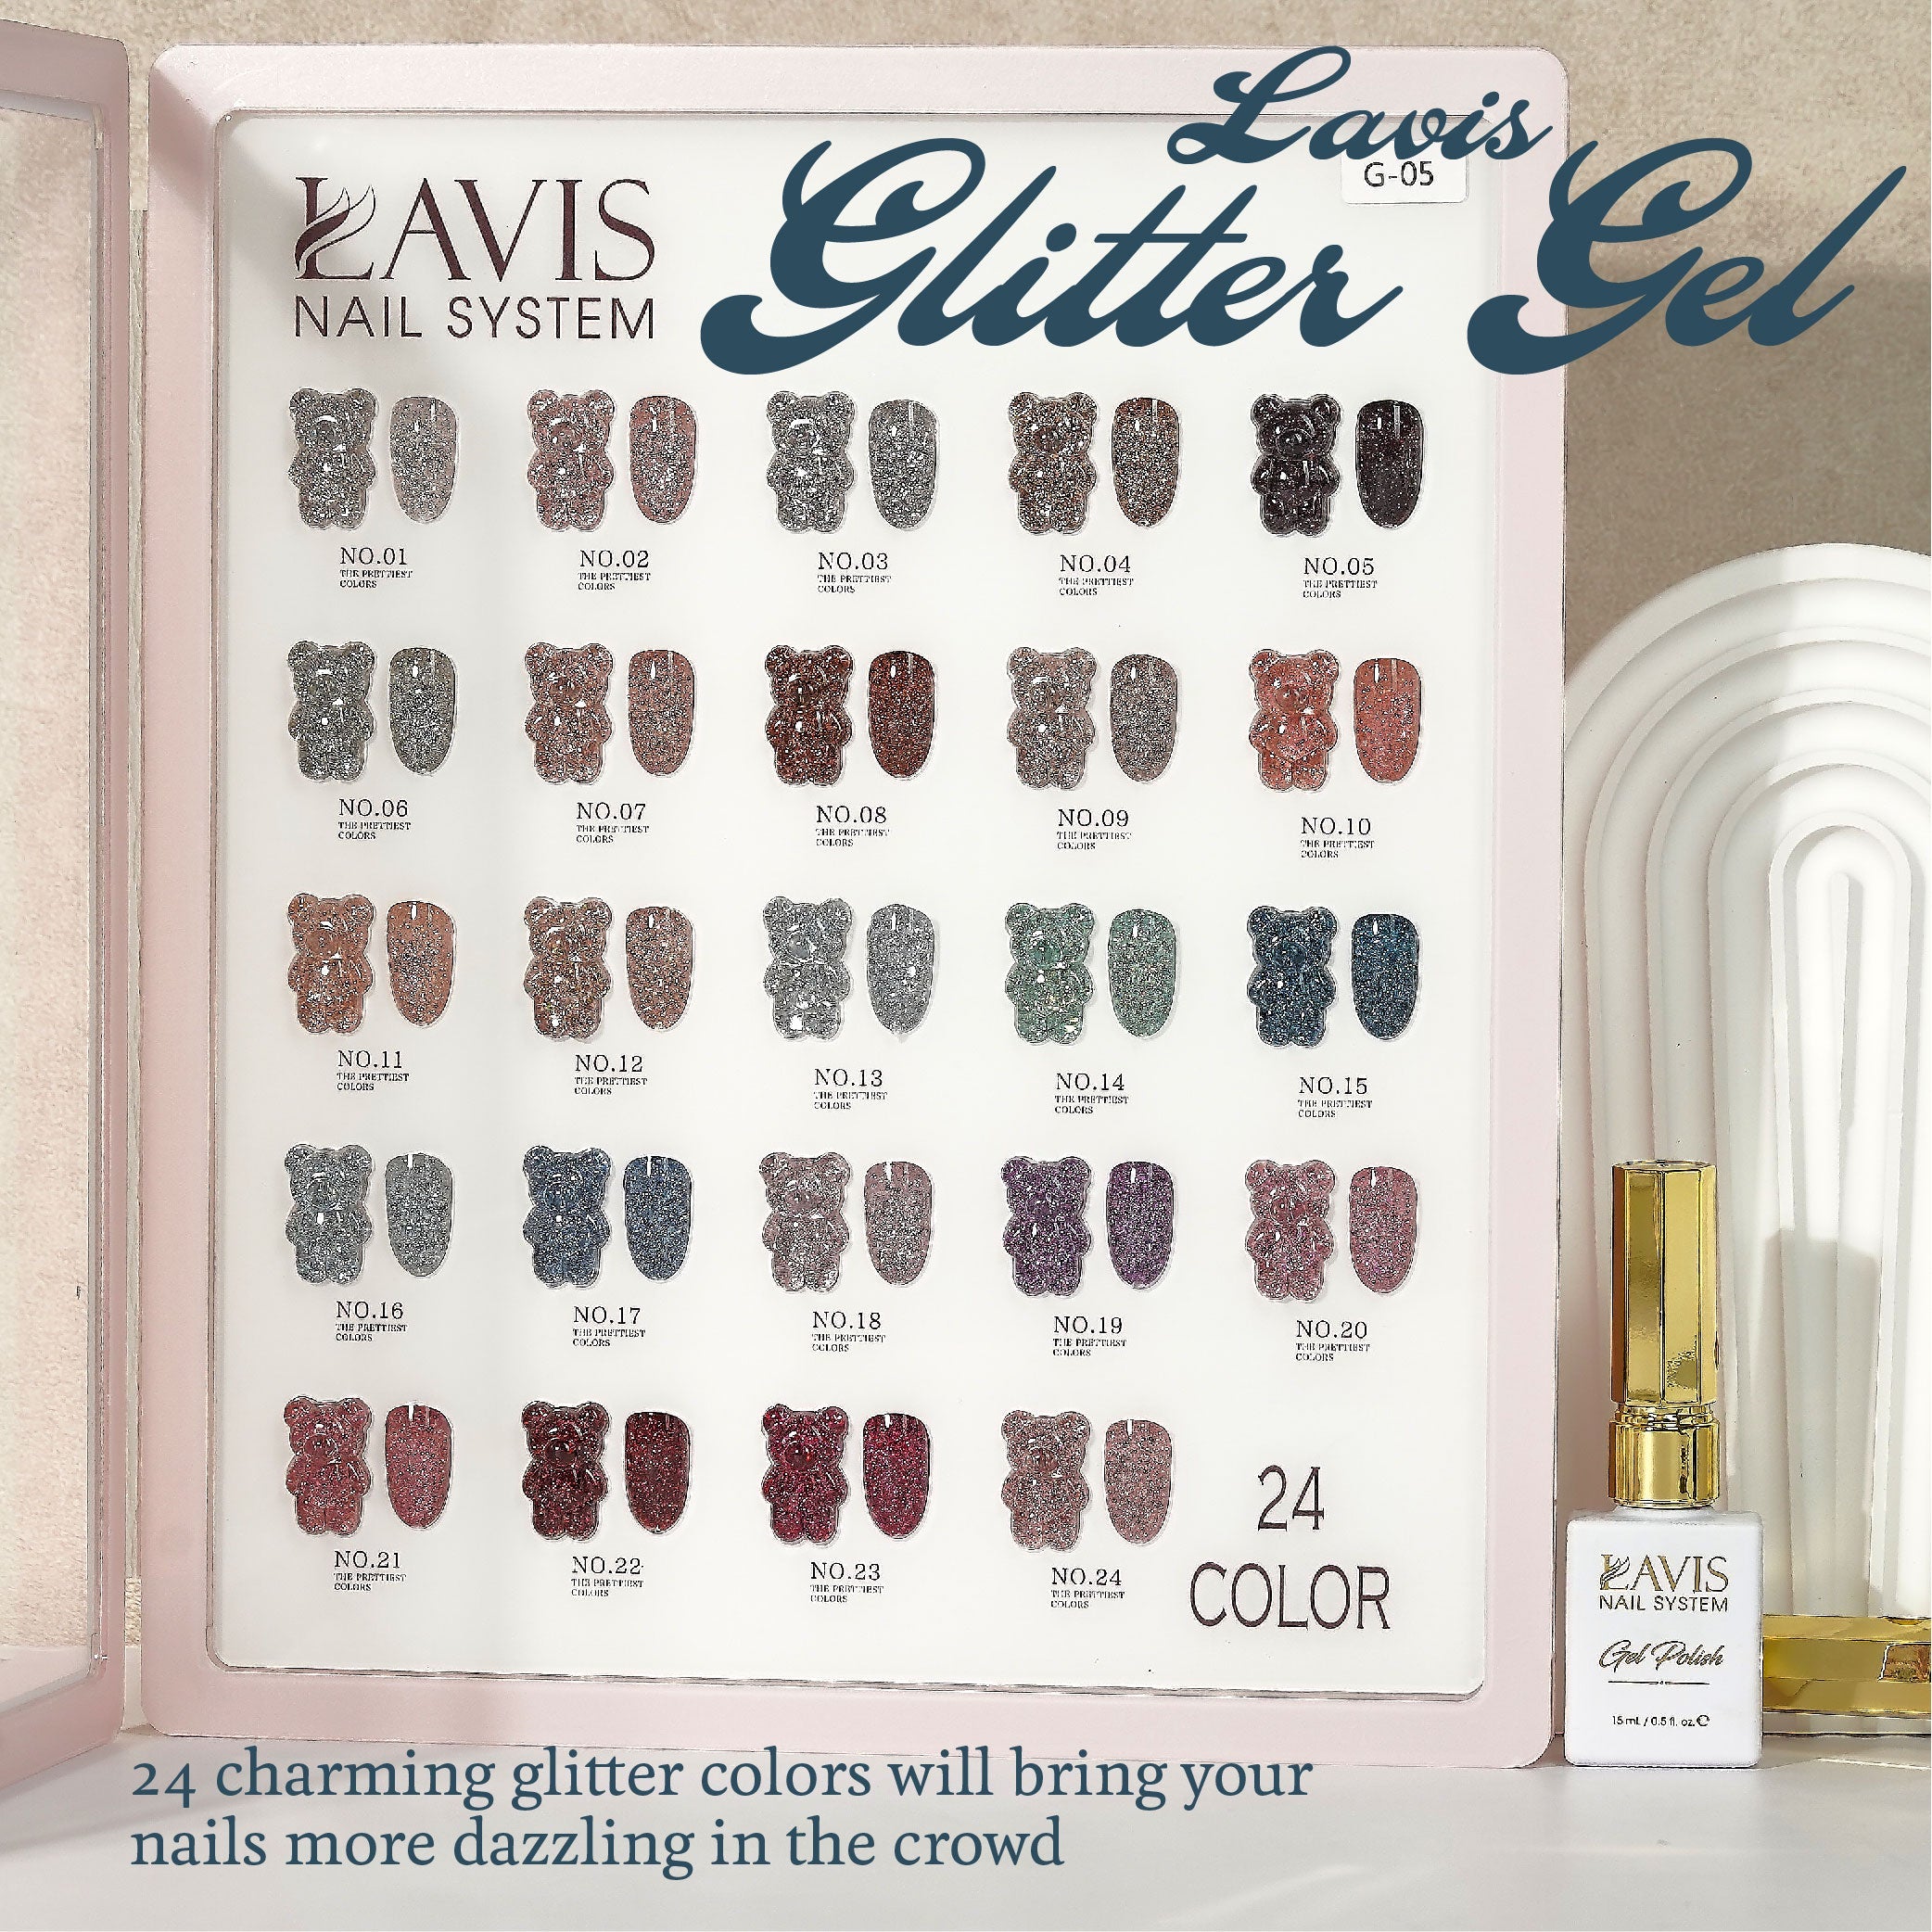 LAVIS Glitter G05 - 11 - Gel Polish 0.5oz - Champagne Toast Glitter Collection